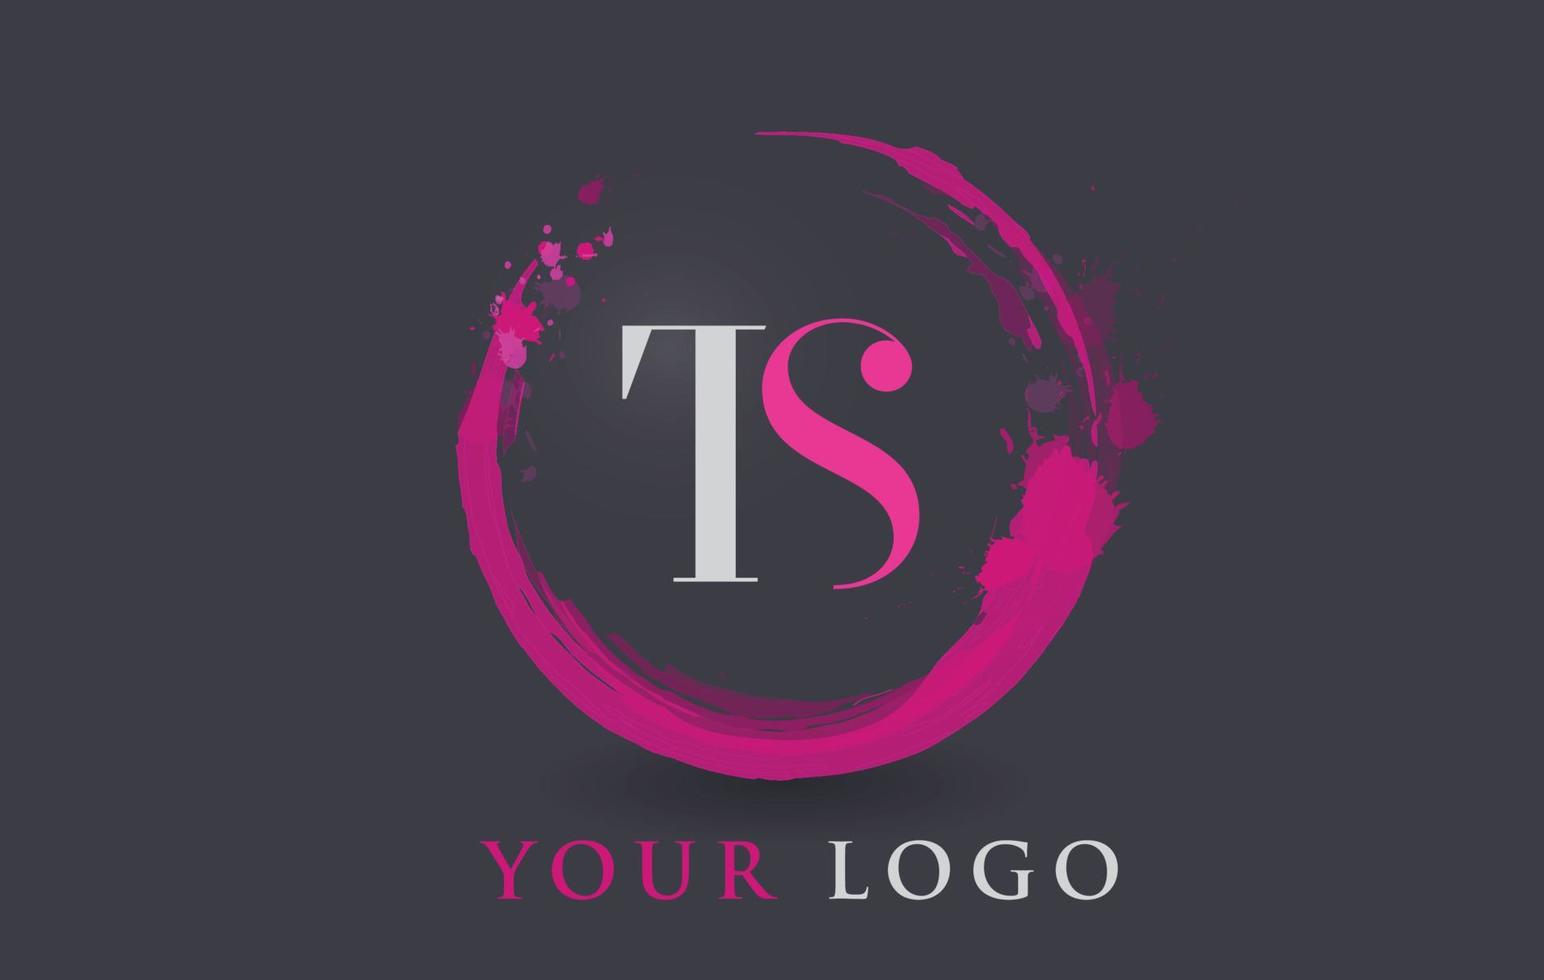 TS Letter Logo Circular Purple Splash Brush Concept. 4907364 Vector Art ...